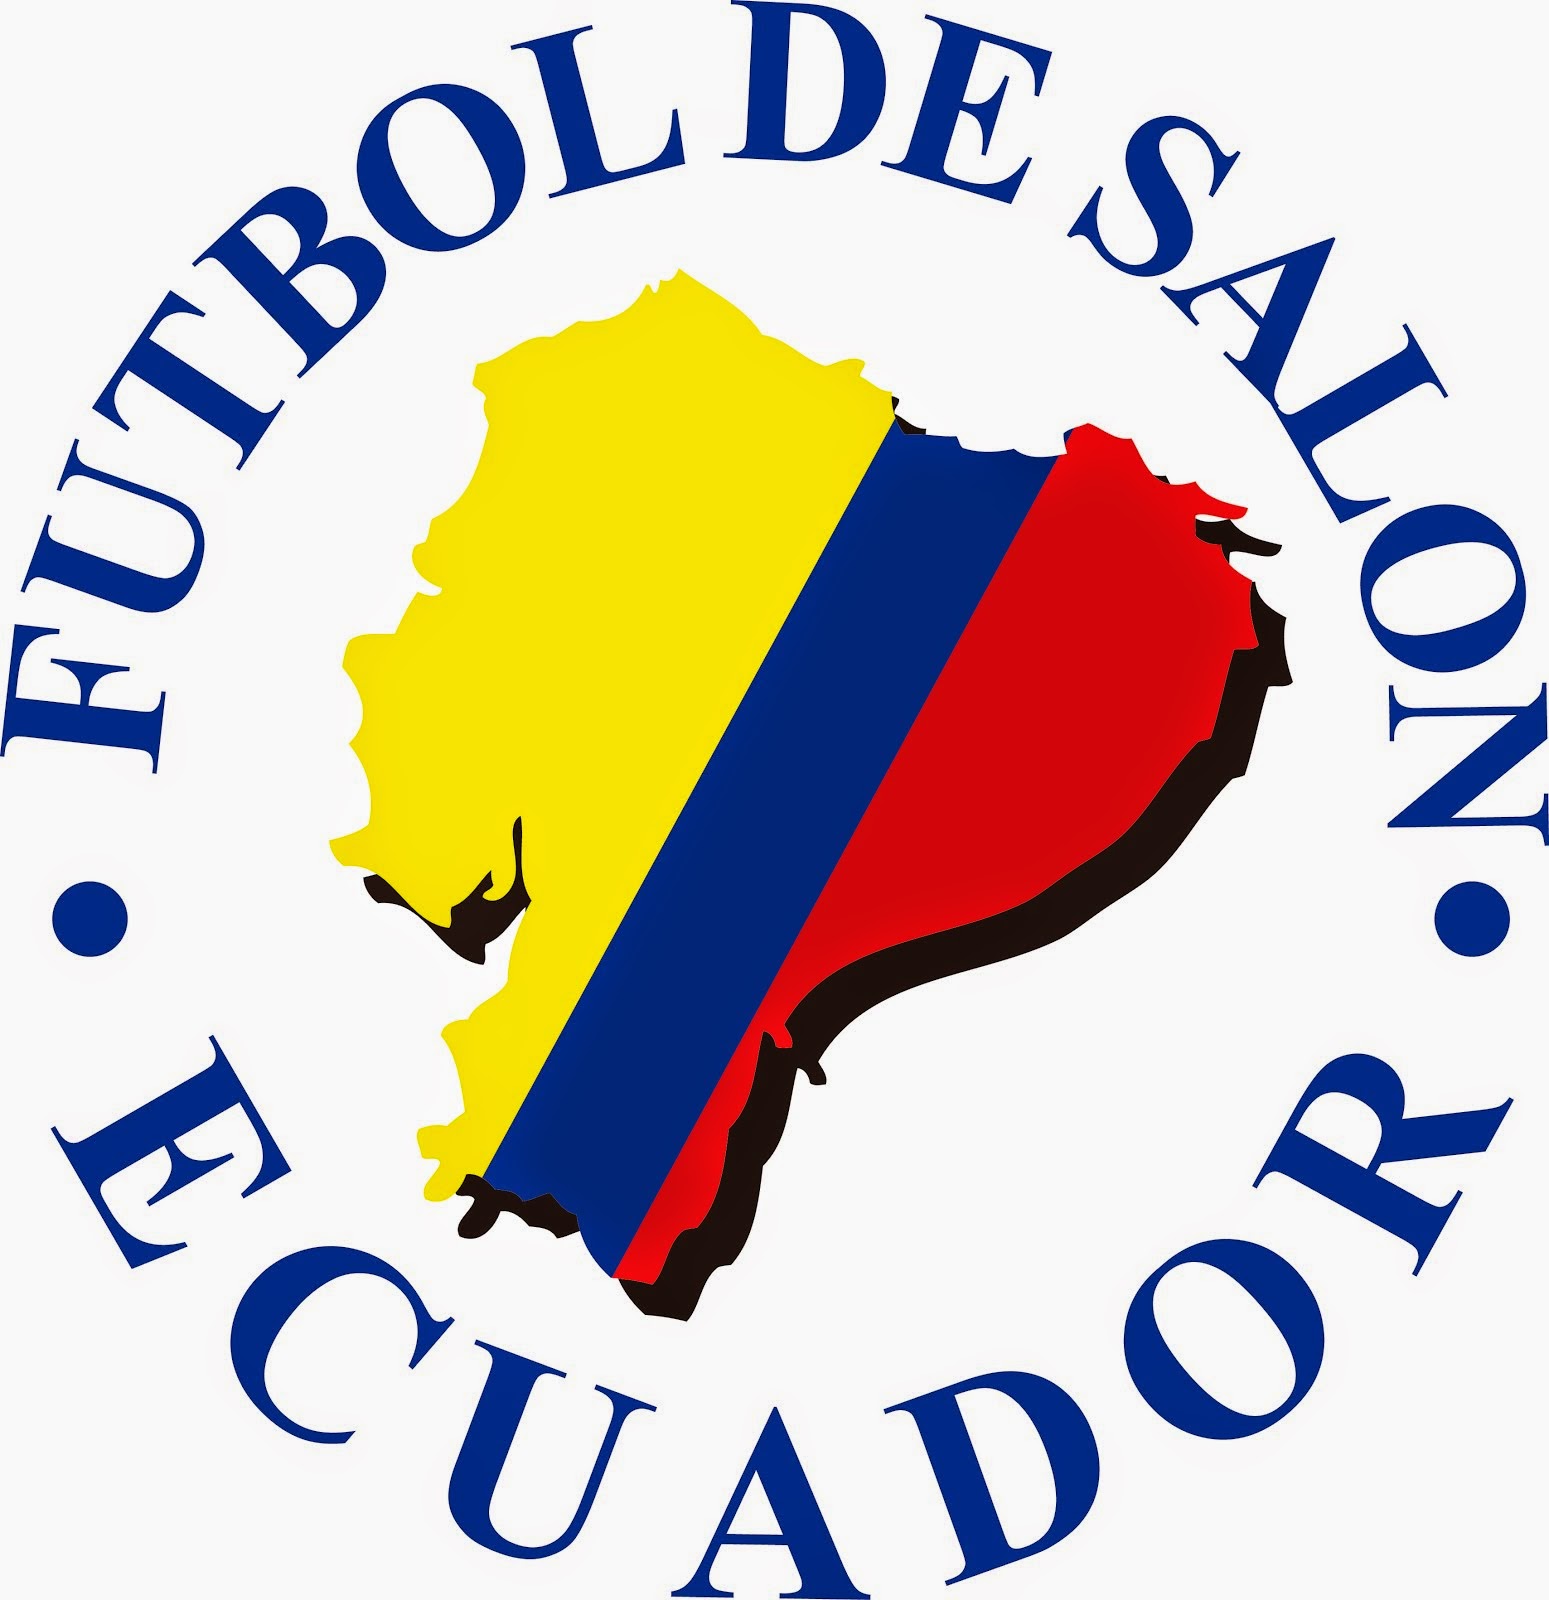 FUTBOL DE SALON DEL ECUADOR